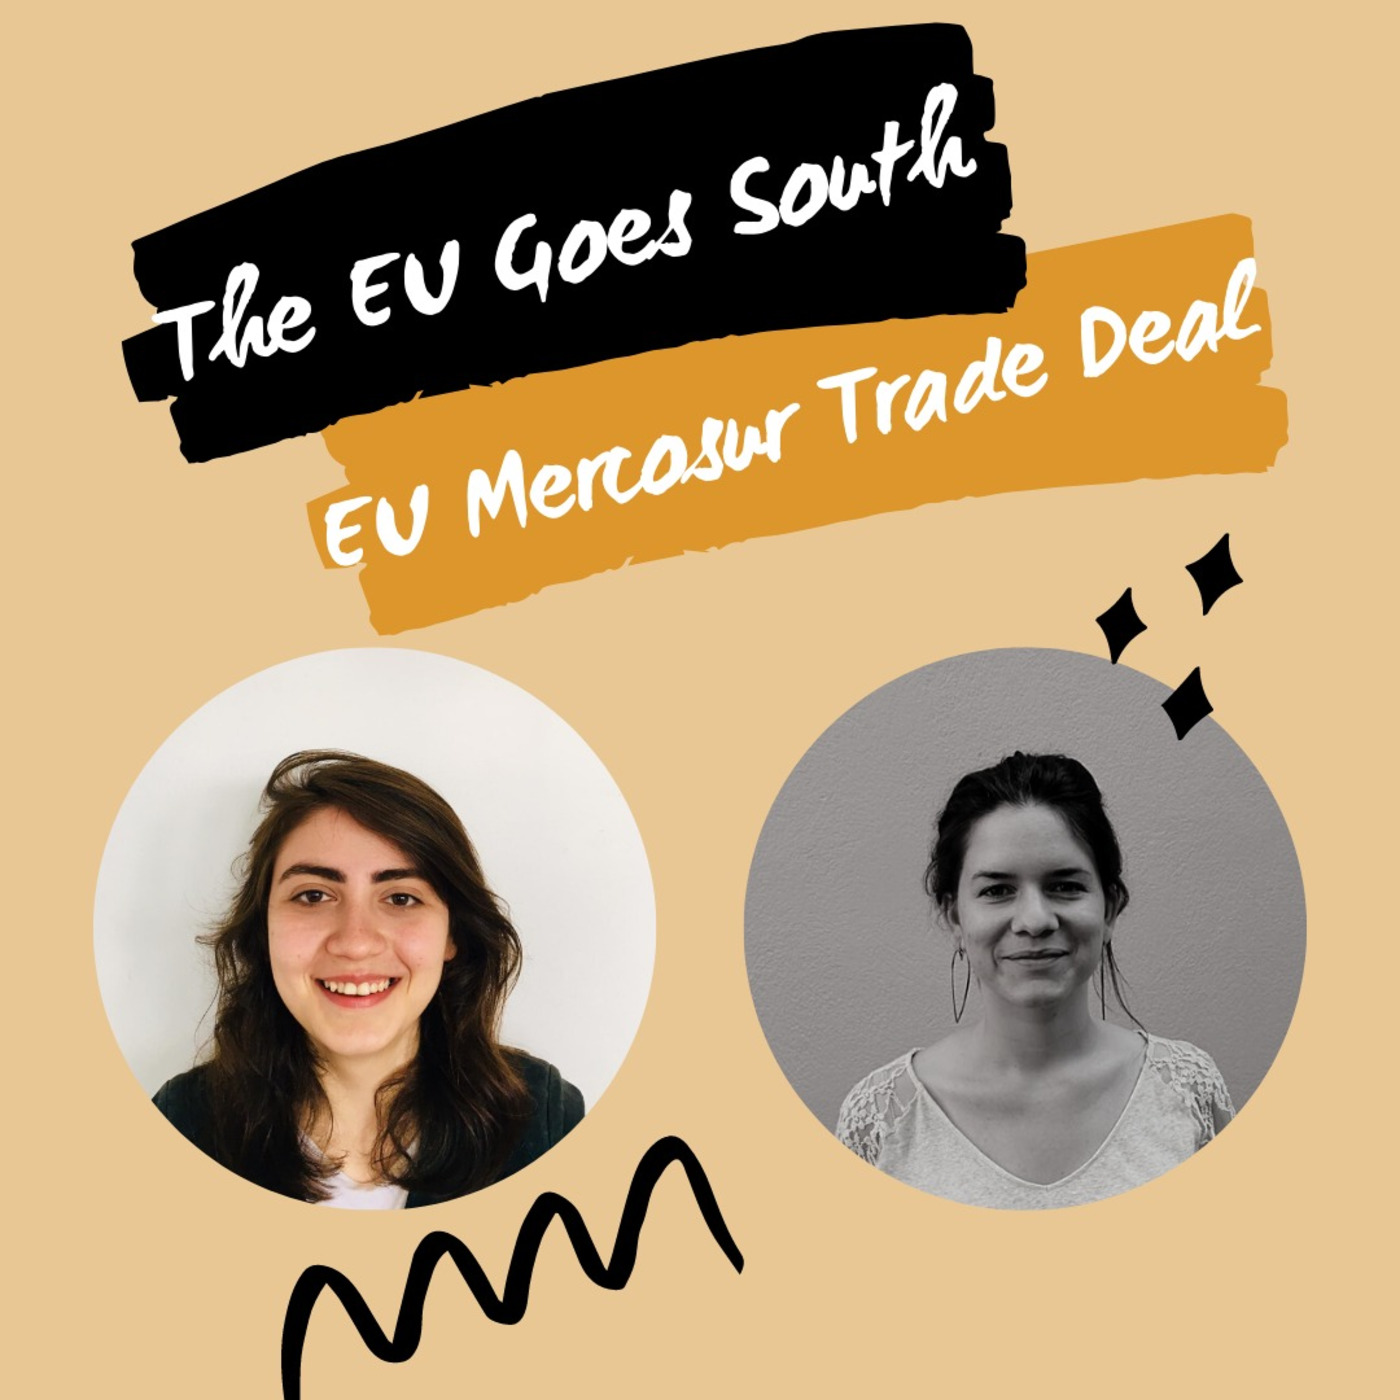 The EU Goes South - EU Mercosur Trade Deal